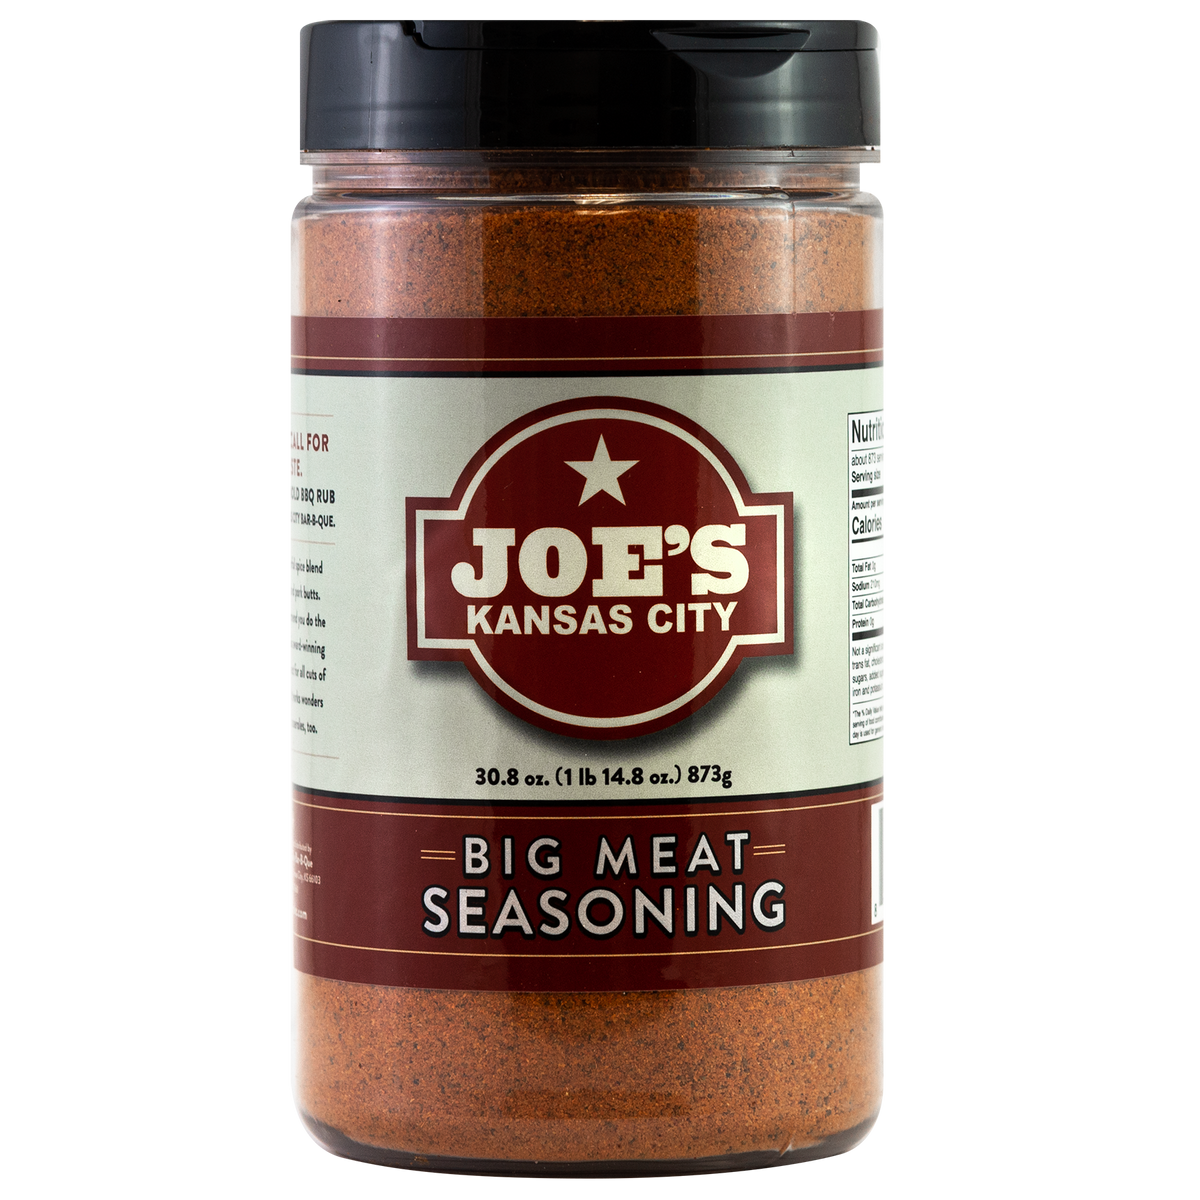 Joe's Kansas City Big Meat Seasoning 13.2 oz.